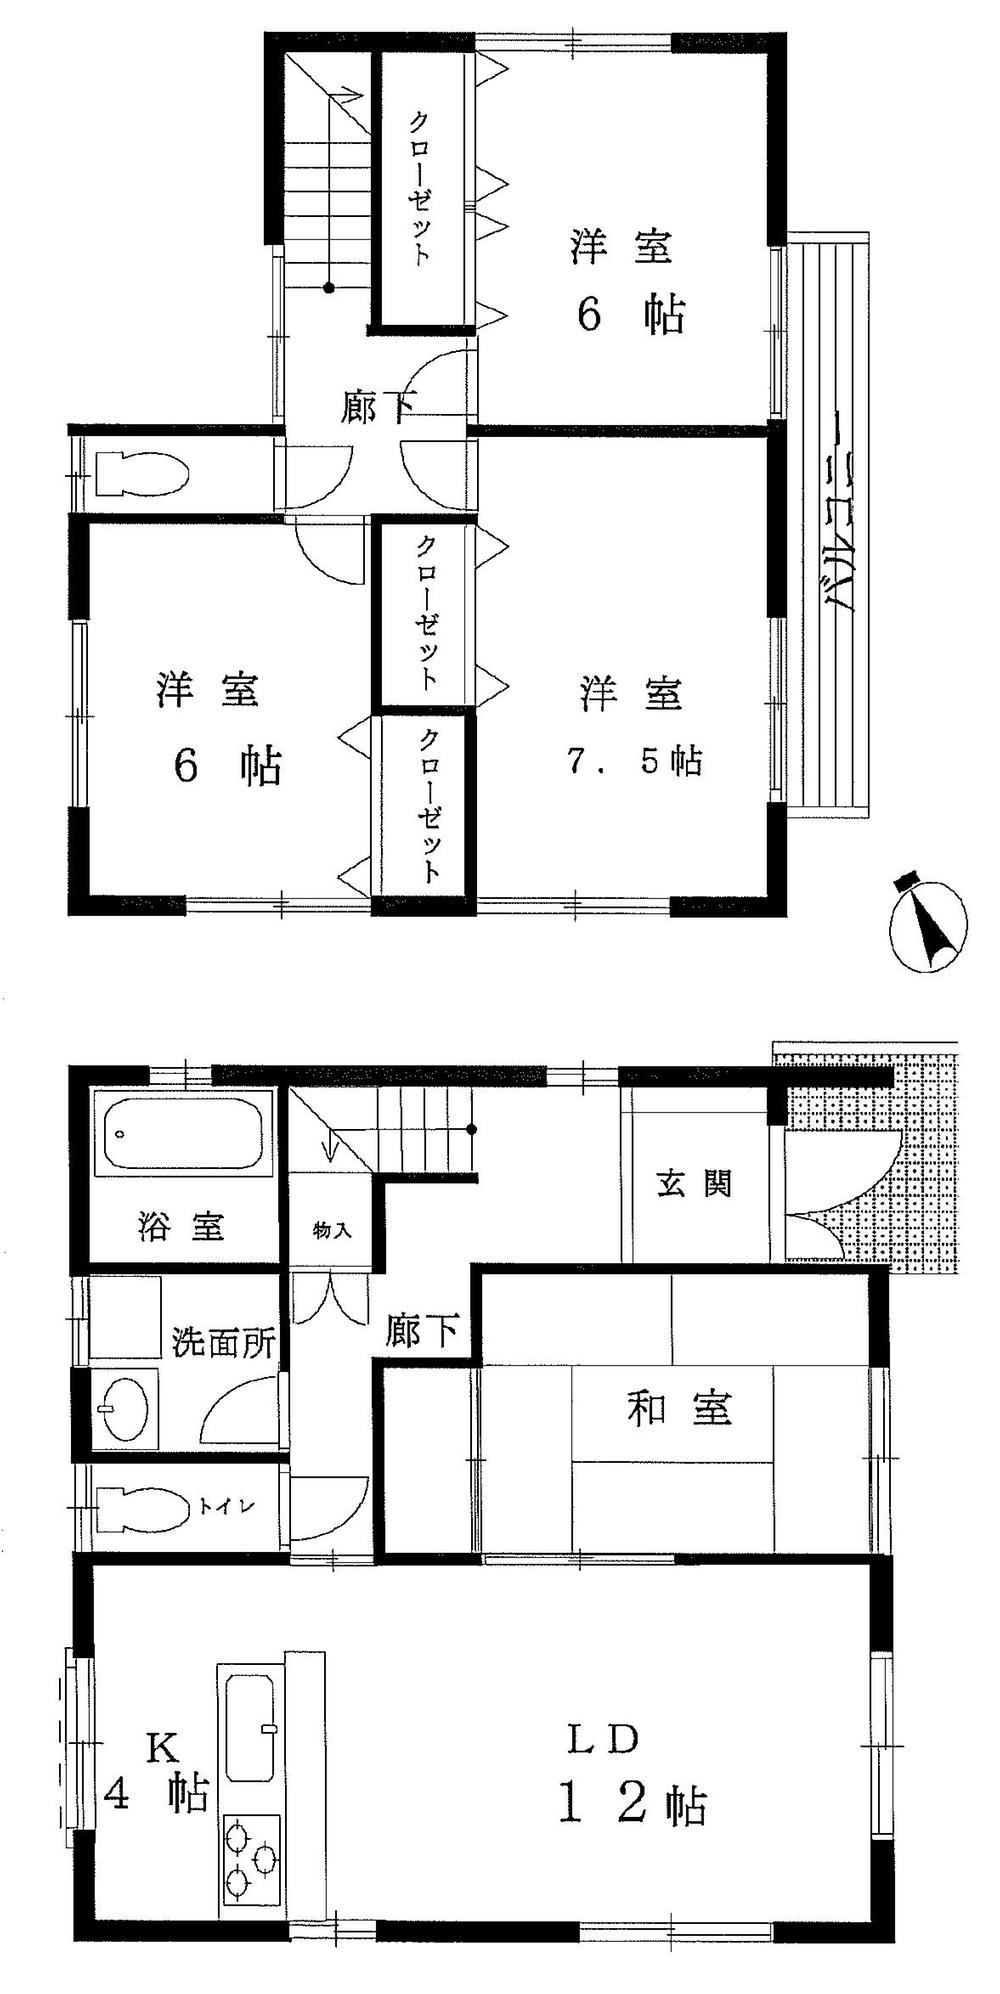 Floor plan. 21 million yen, 4LDK, Land area 142.61 sq m , Building area 103.5 sq m 2013 November renovated